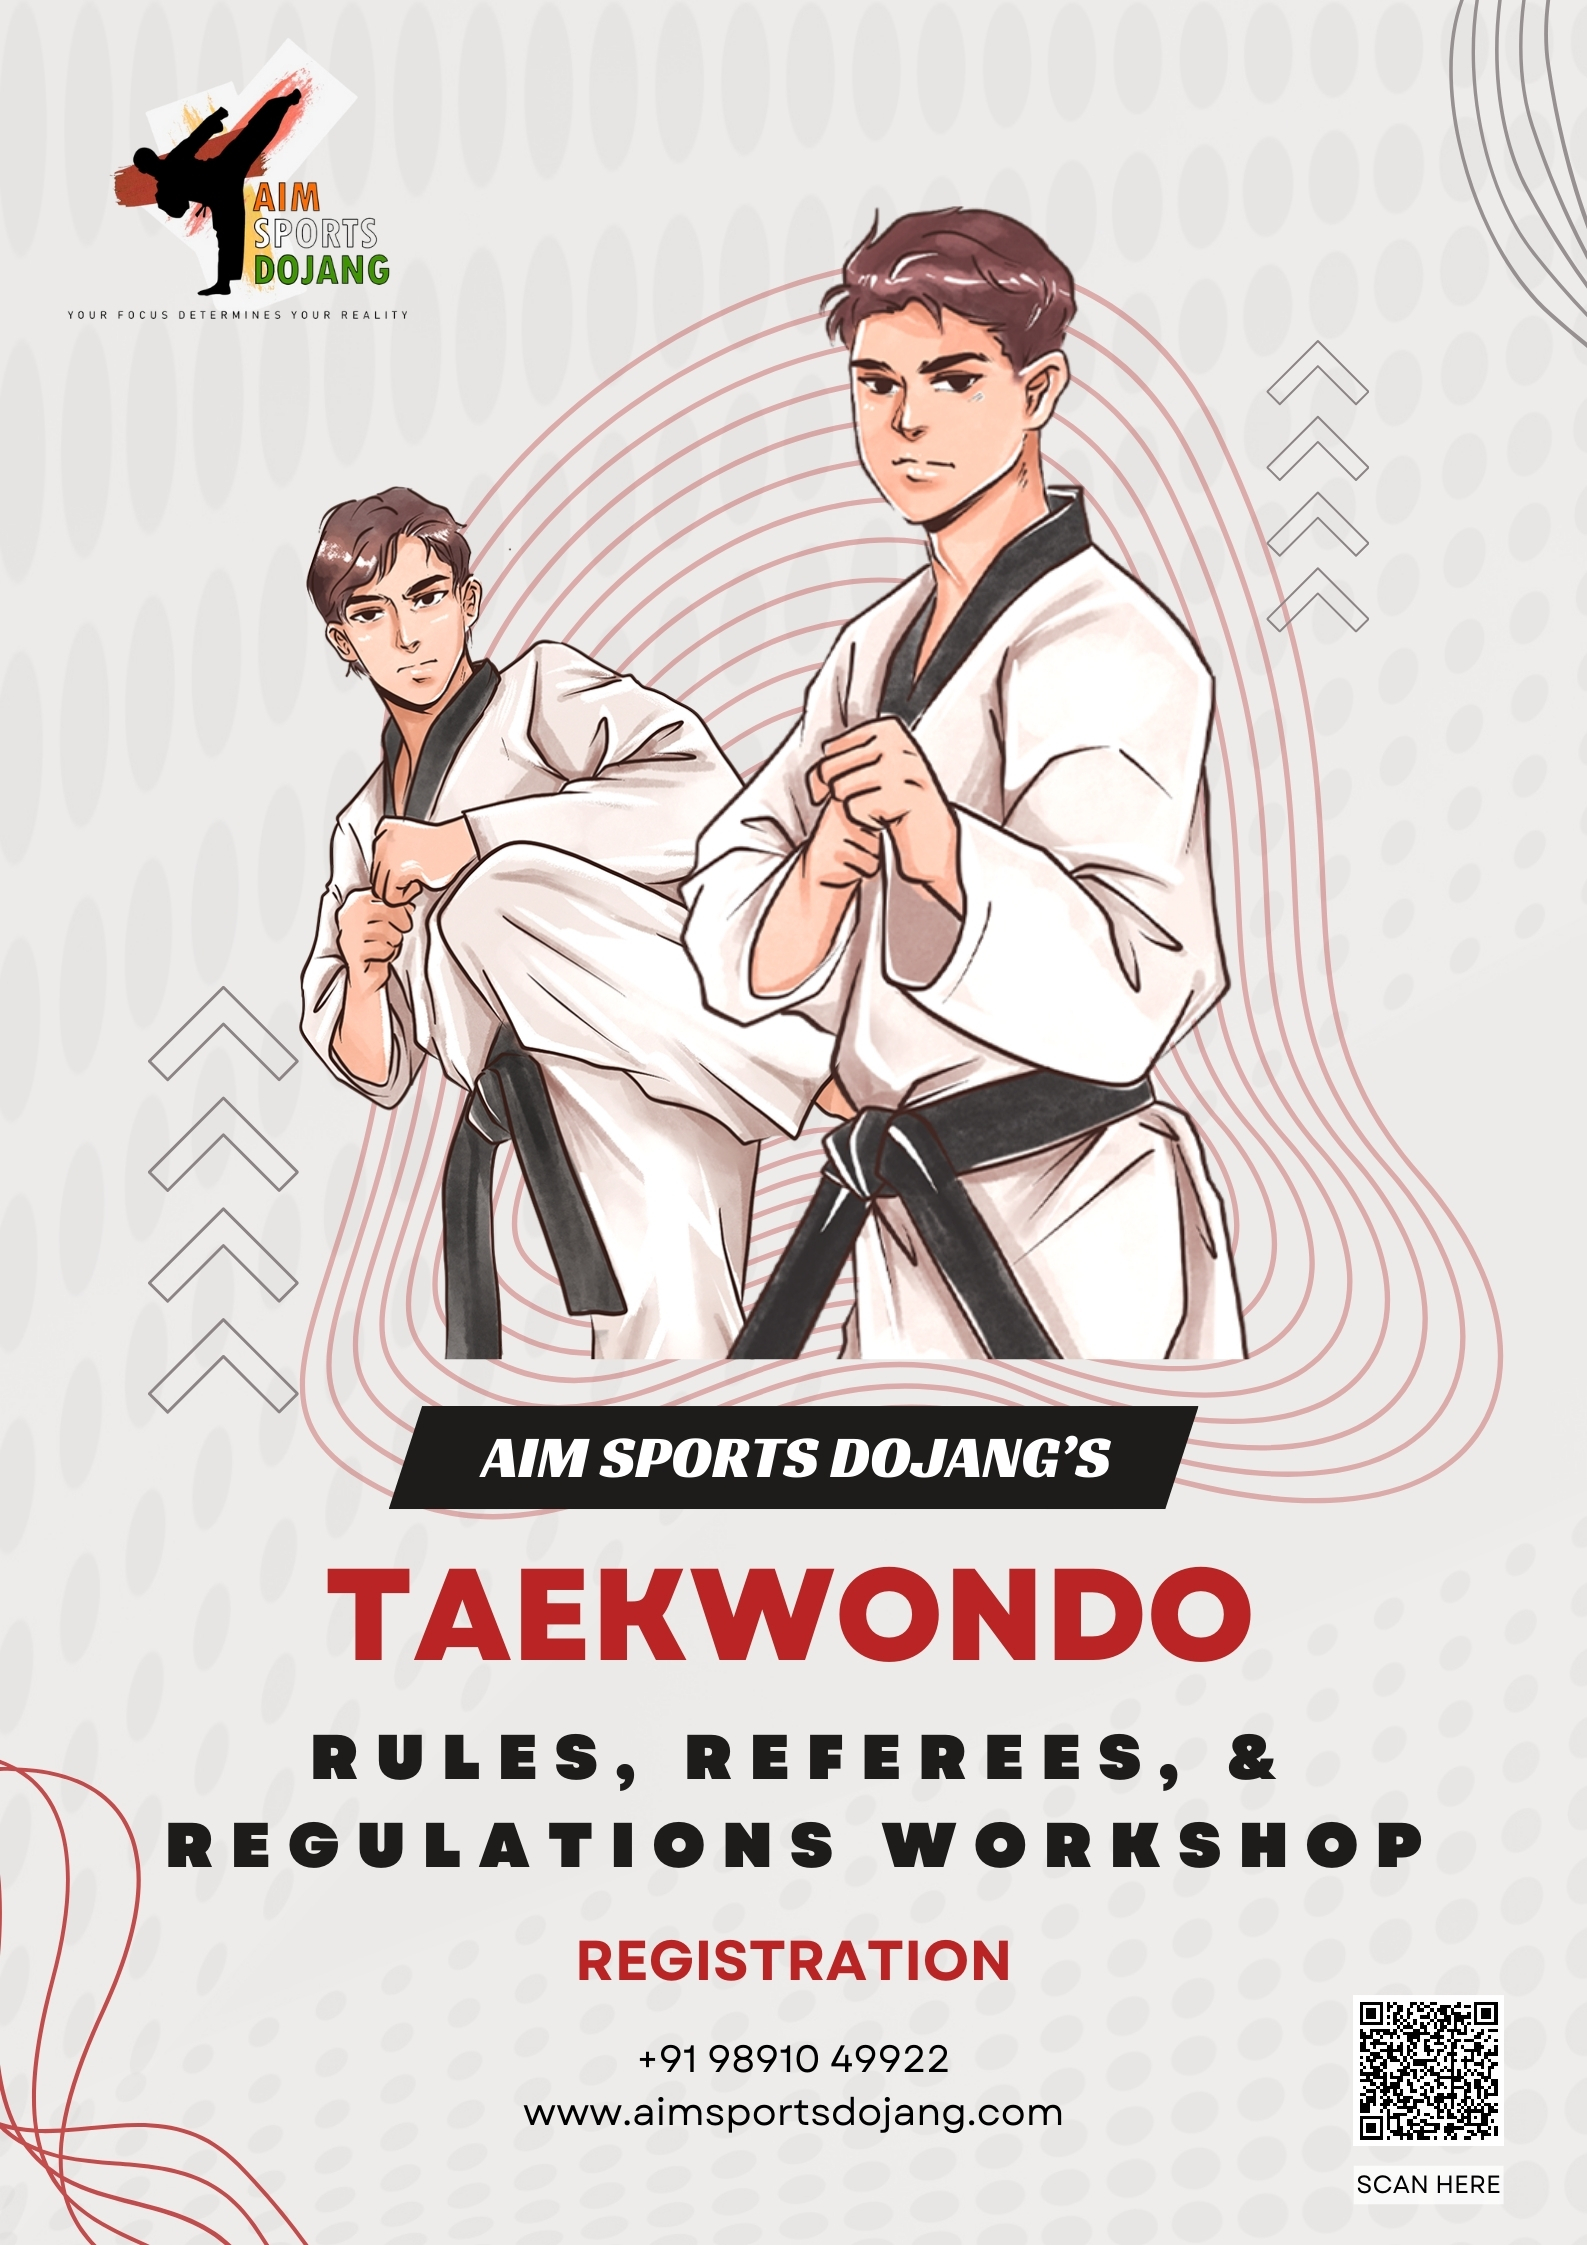 Taekwondo Rules, Referees, & Regulations Workshop